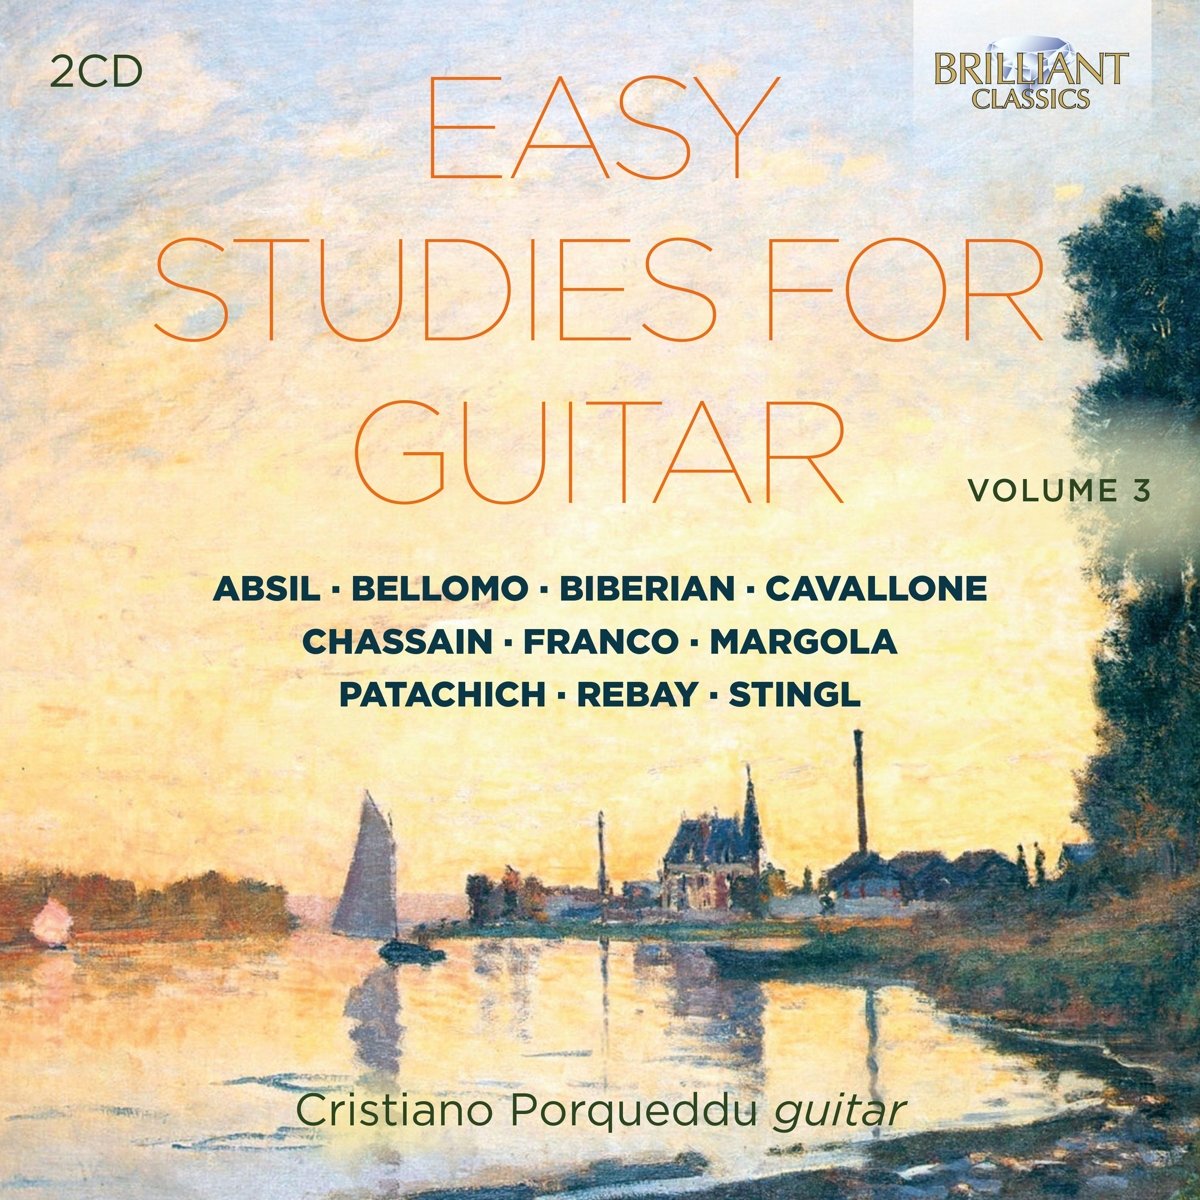 ABSIL, BELLOMO, BIBERIAN, CAVALLONE - EASY STUDIES FOR GUITAR 2CD CRISTIANO PORQUEDDU